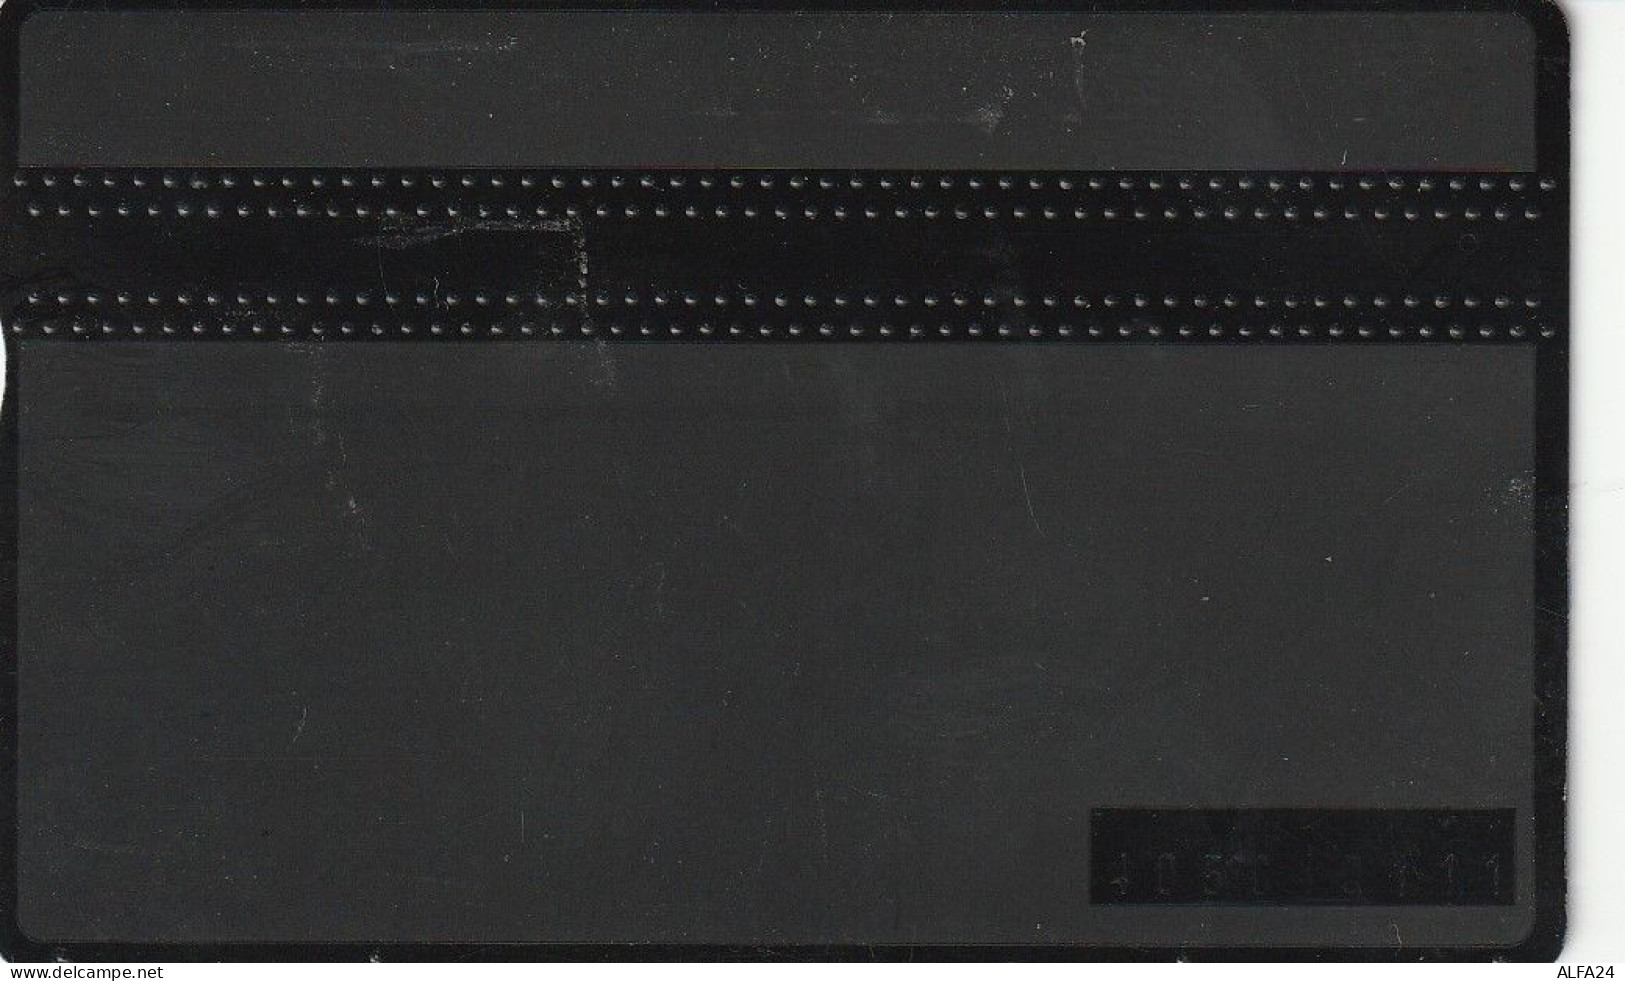 PHONE CARD BELGIO LG (CV6678 - Zonder Chip